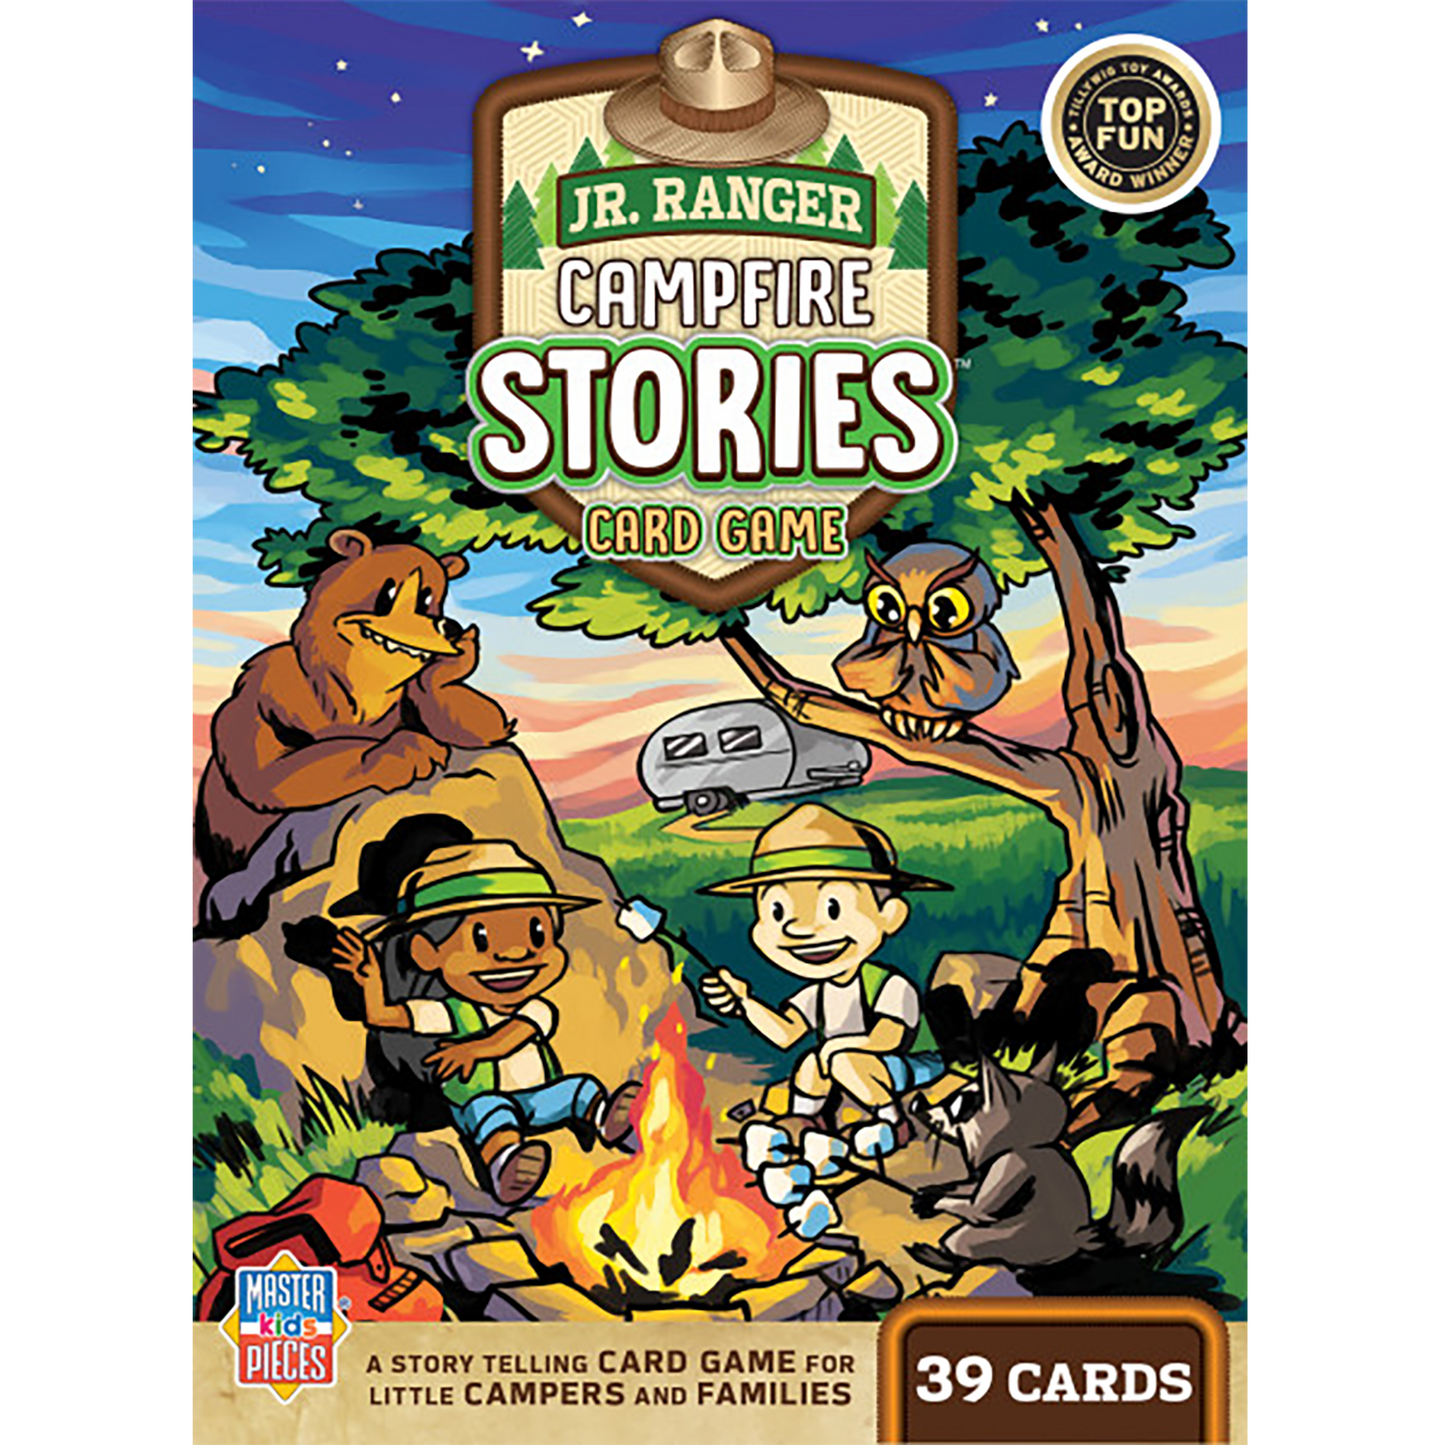 JR RANGER CAMPFIRE STORIES CARD GAME